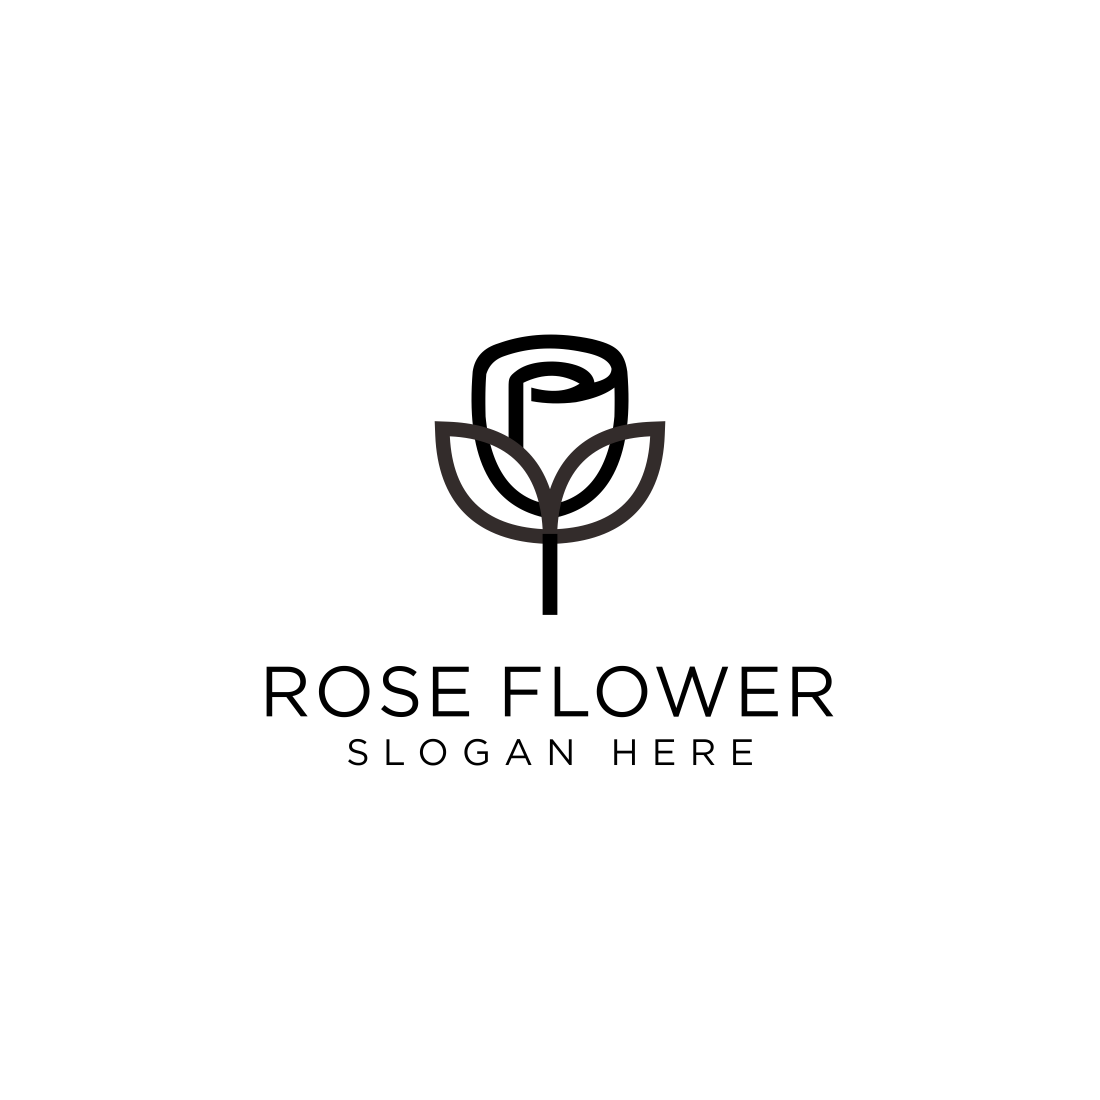 rose flower logo vector design preview image.